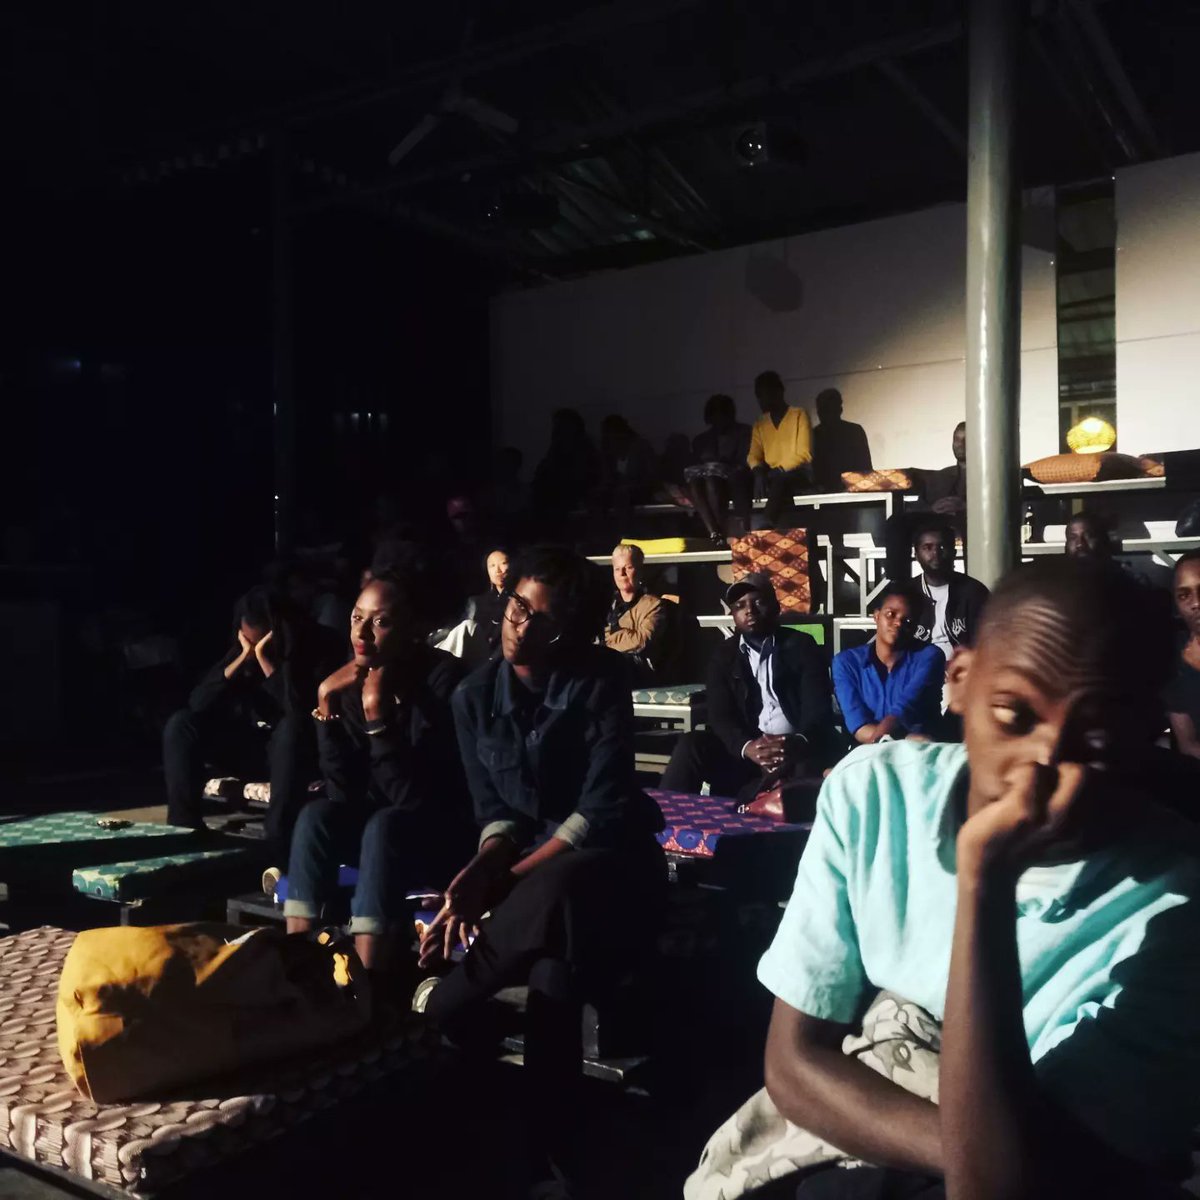 #OngoingEvent 
Film screening session
Film; #CitizenKwame, alongside a Q&A session with Actor & Director @YuhiAmuli
Venue: @l__espace
#rwandanevents #filmscreening #africanfilm #Rwanda #artglo